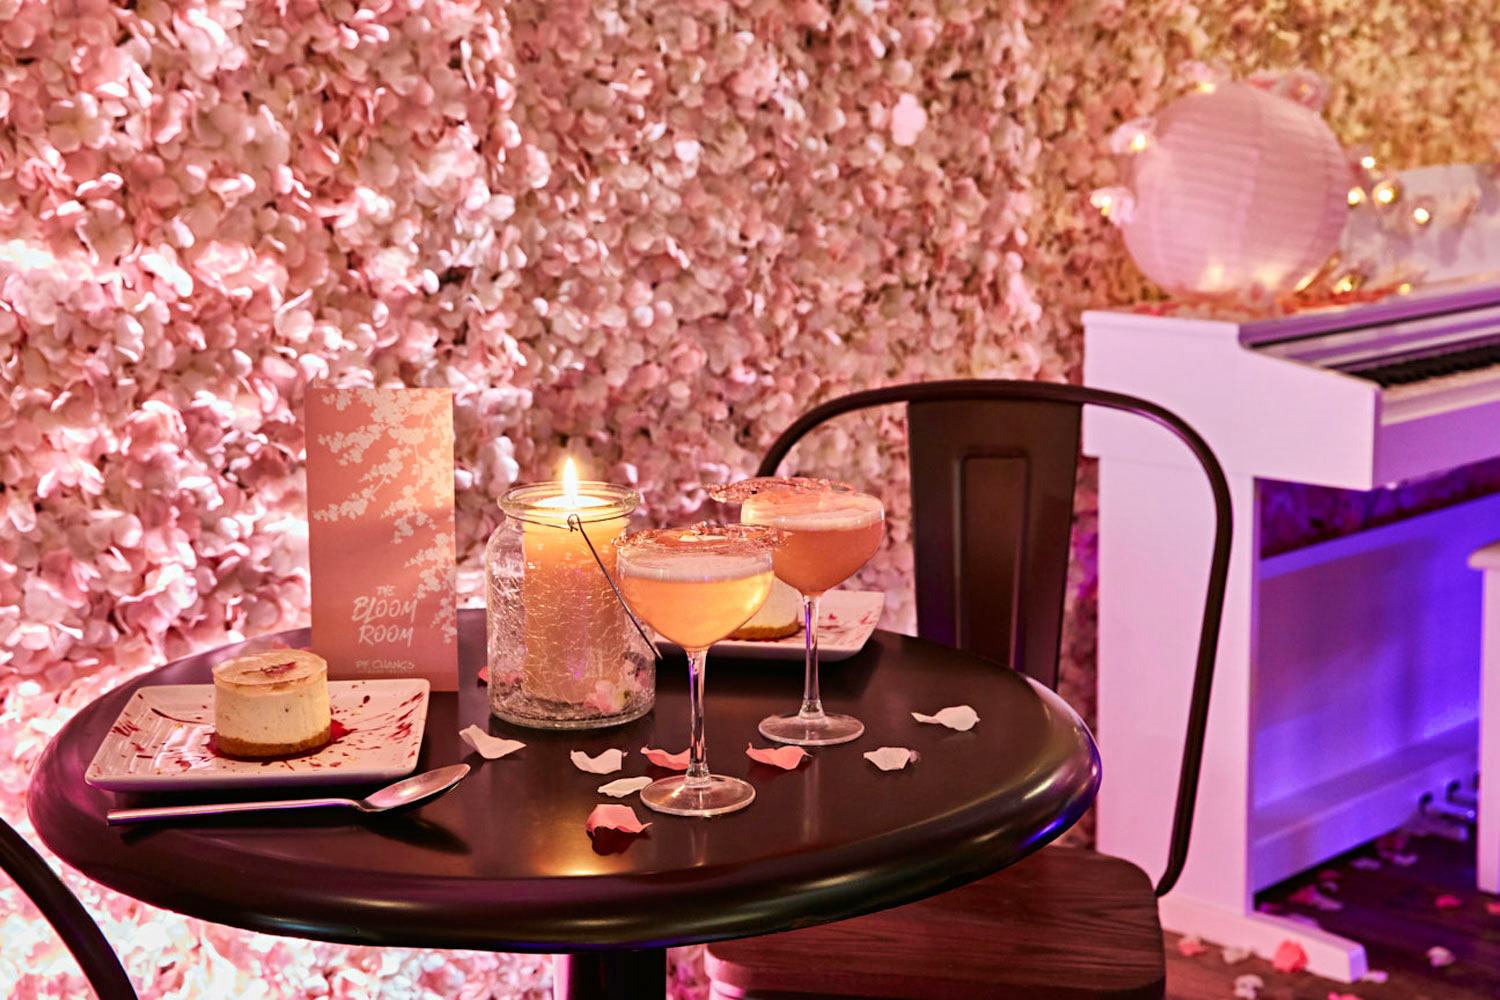 Bloom Room blossom wall drinks on table